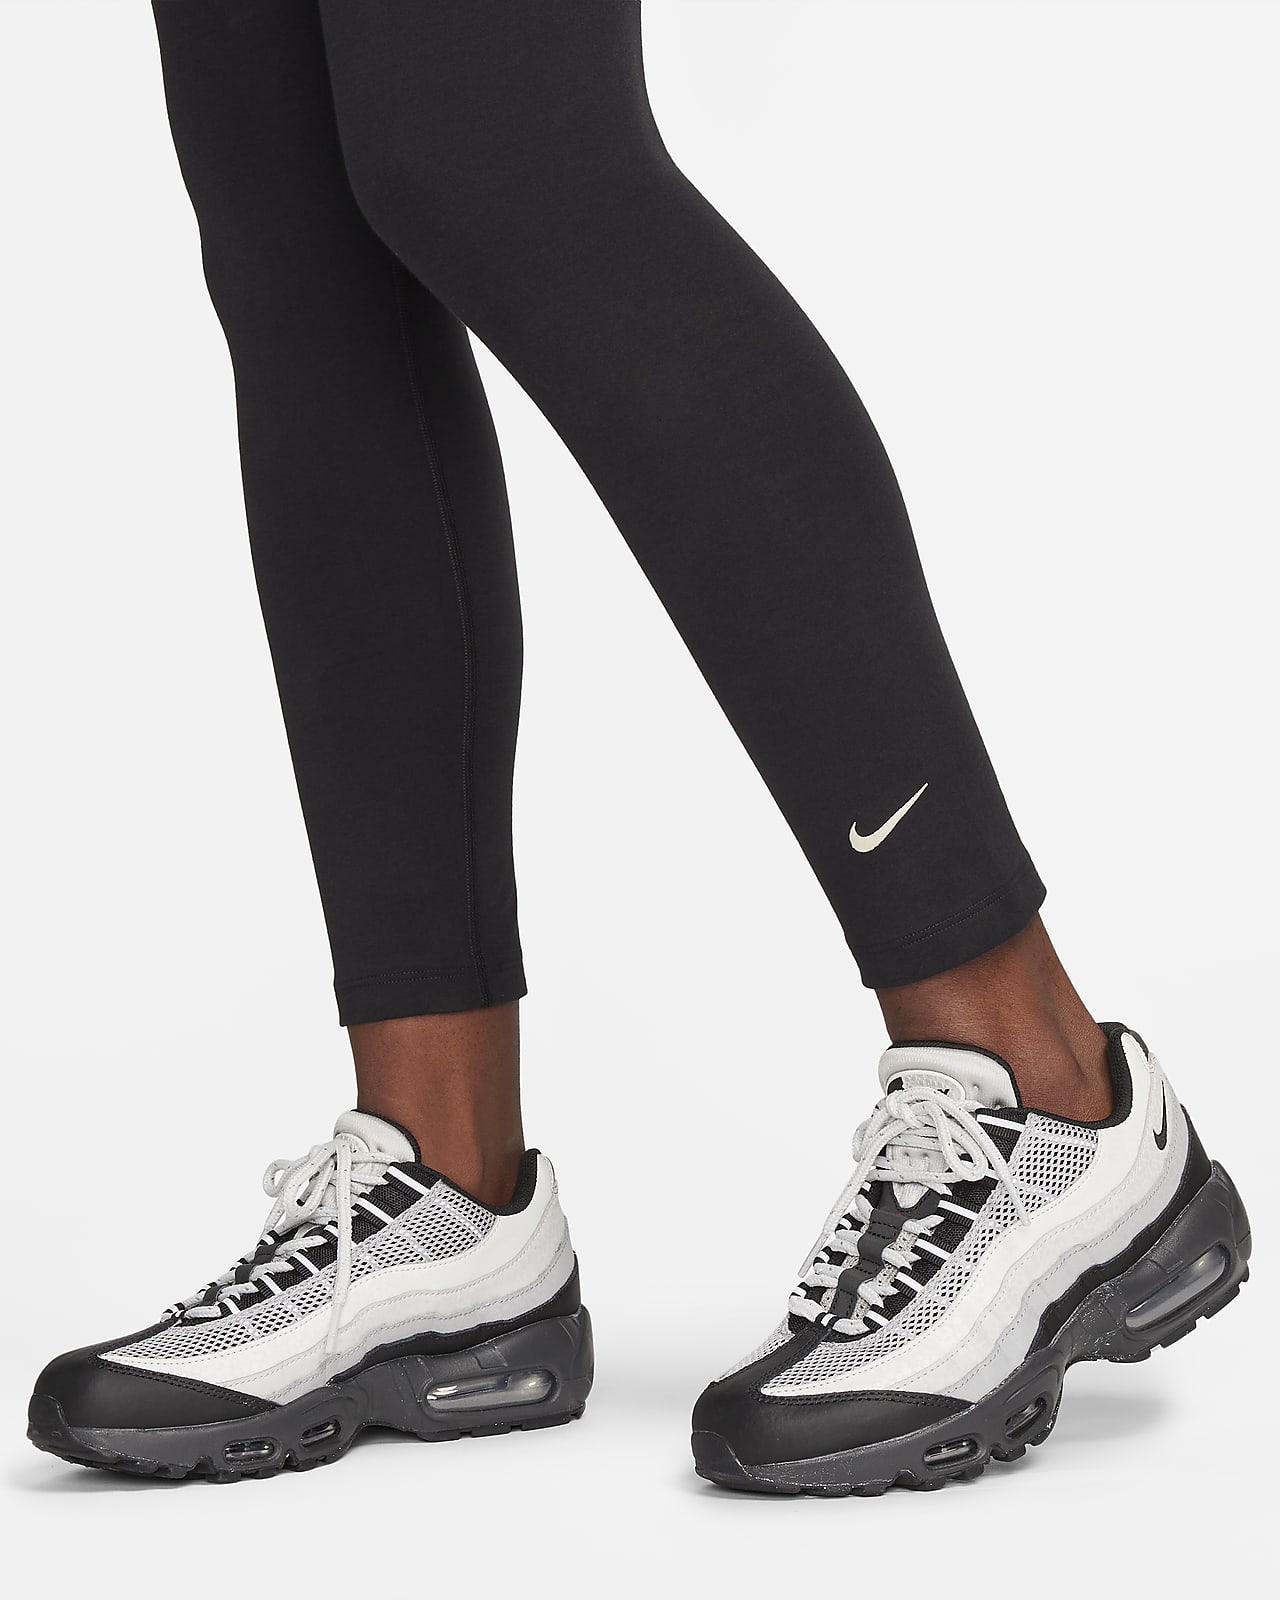 NEW Women's Nike Sportswear Premium High Waisted Swoosh Leggings XS L XL $80